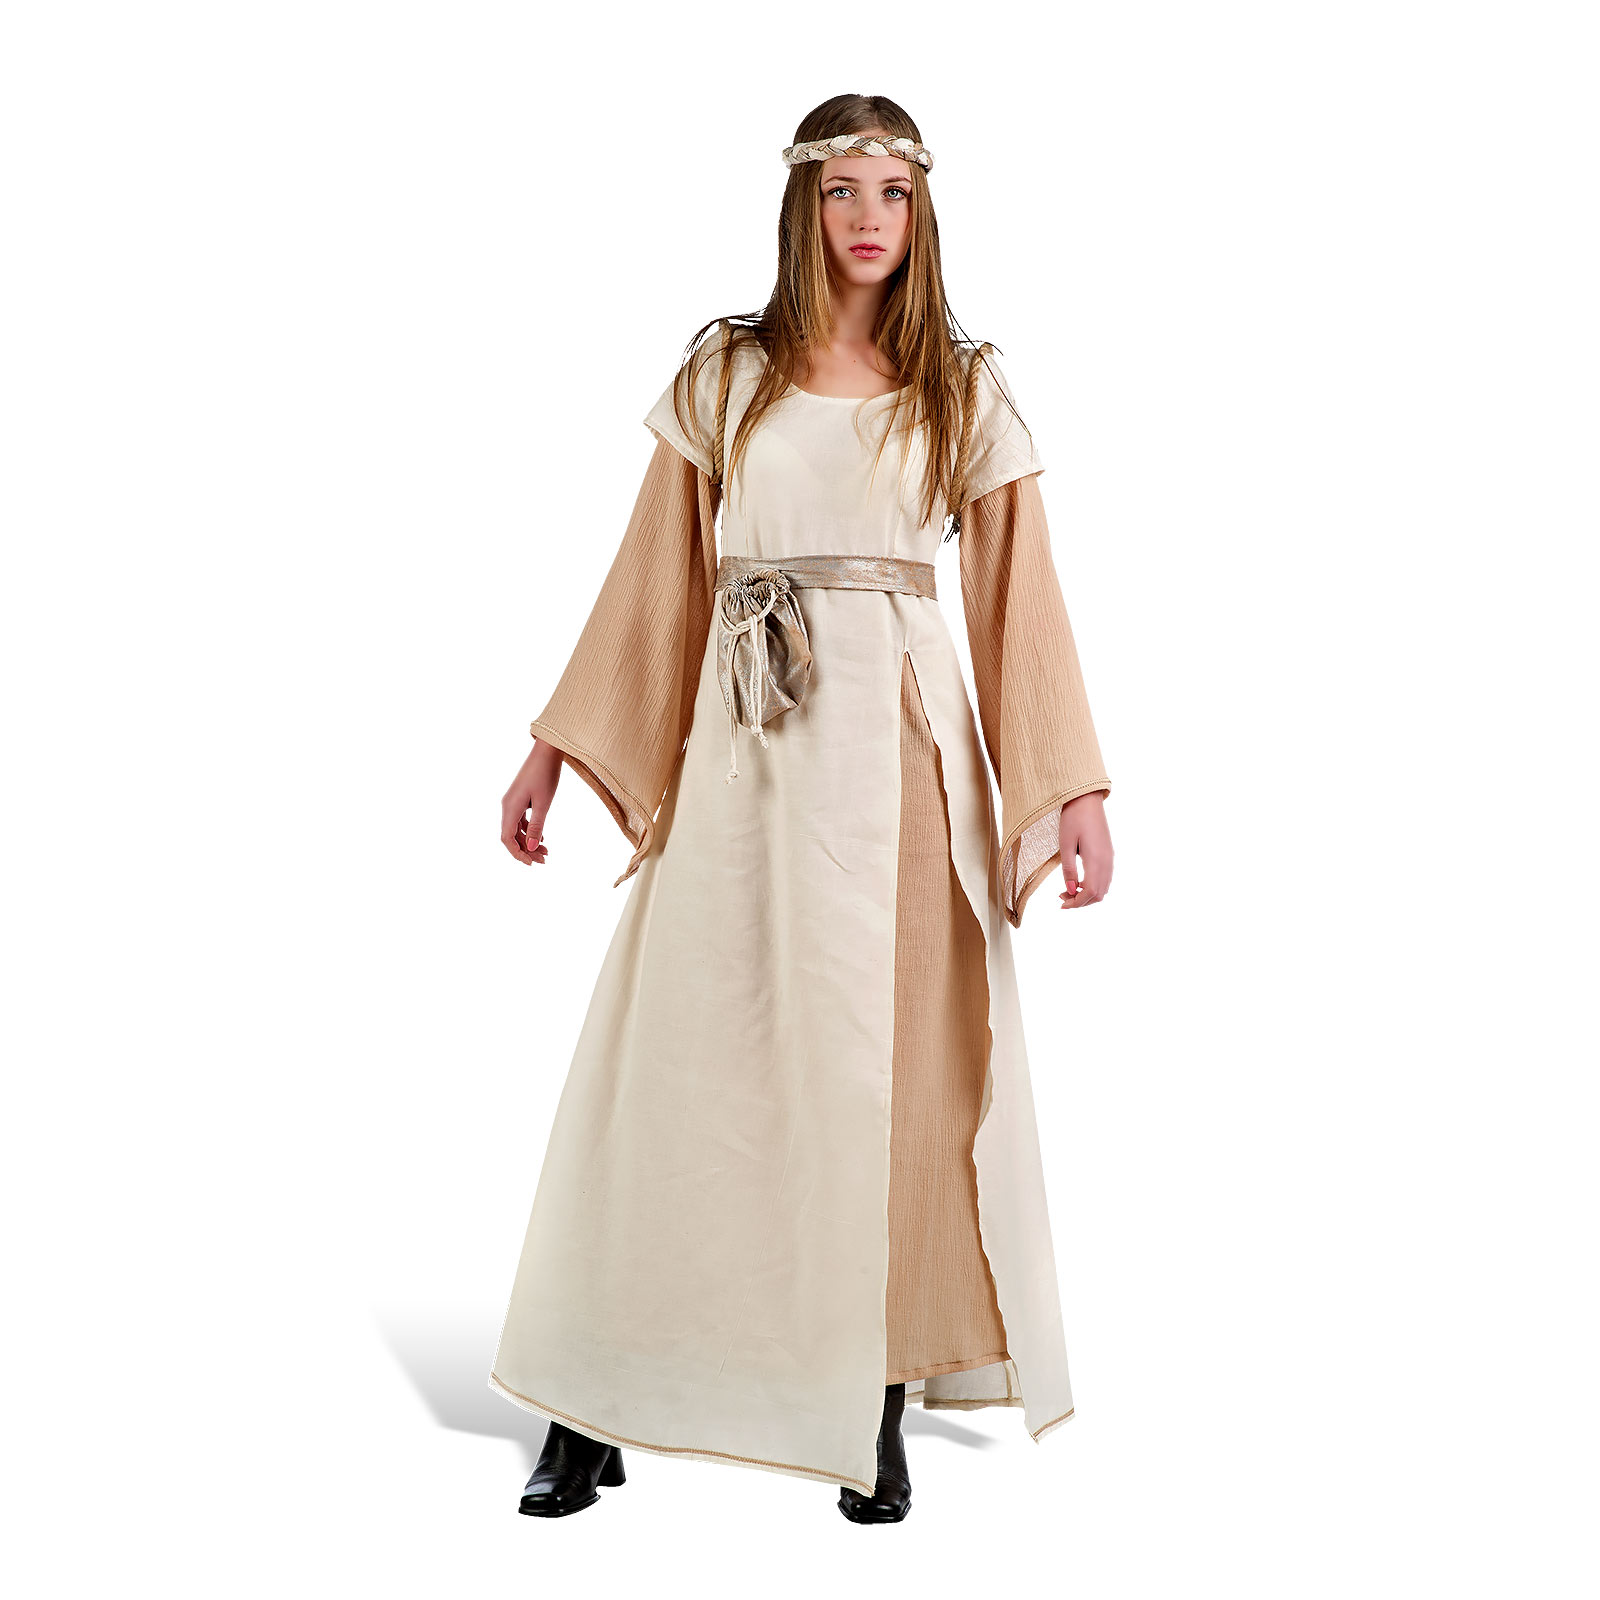 Medieval Lady - Costume